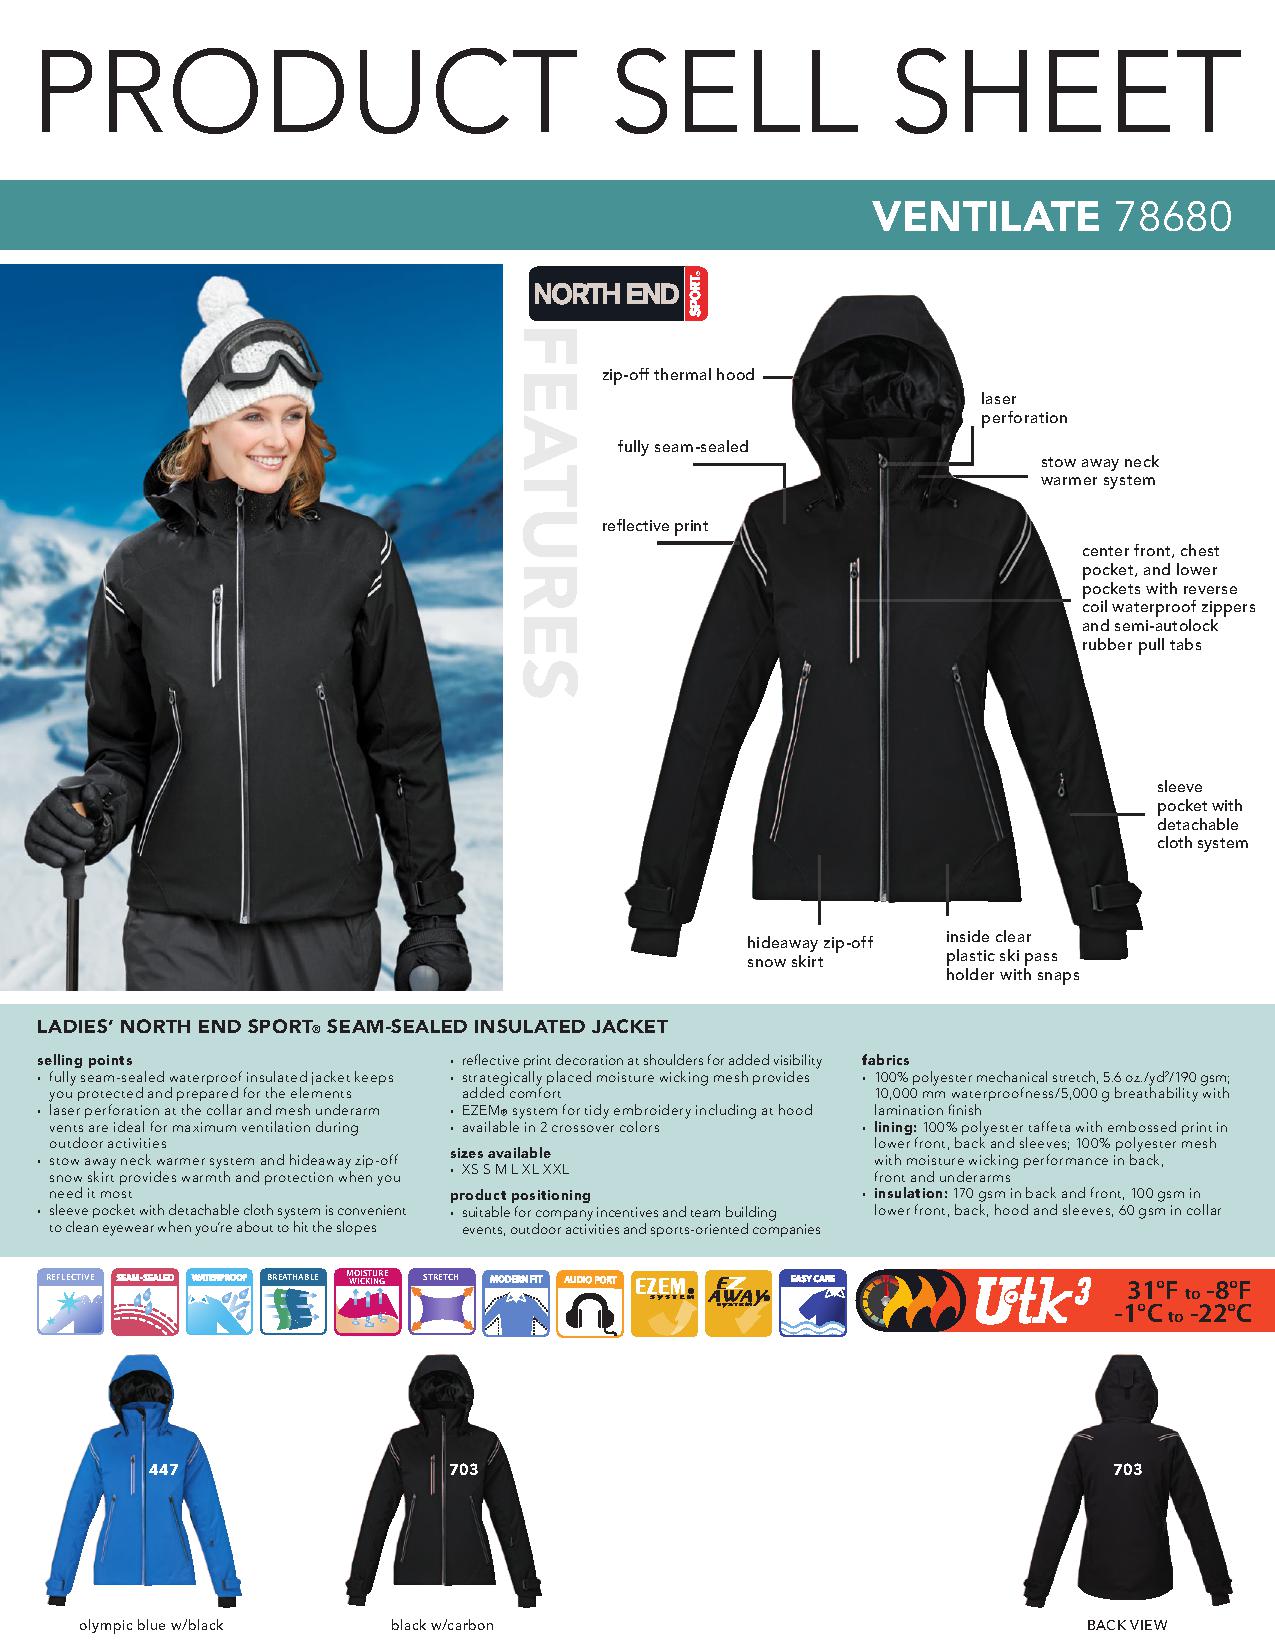 Ash City UTK 3 Warm.Logik 78680 - Ventilate Ladies' Seam-Sealed Insulated Jacket